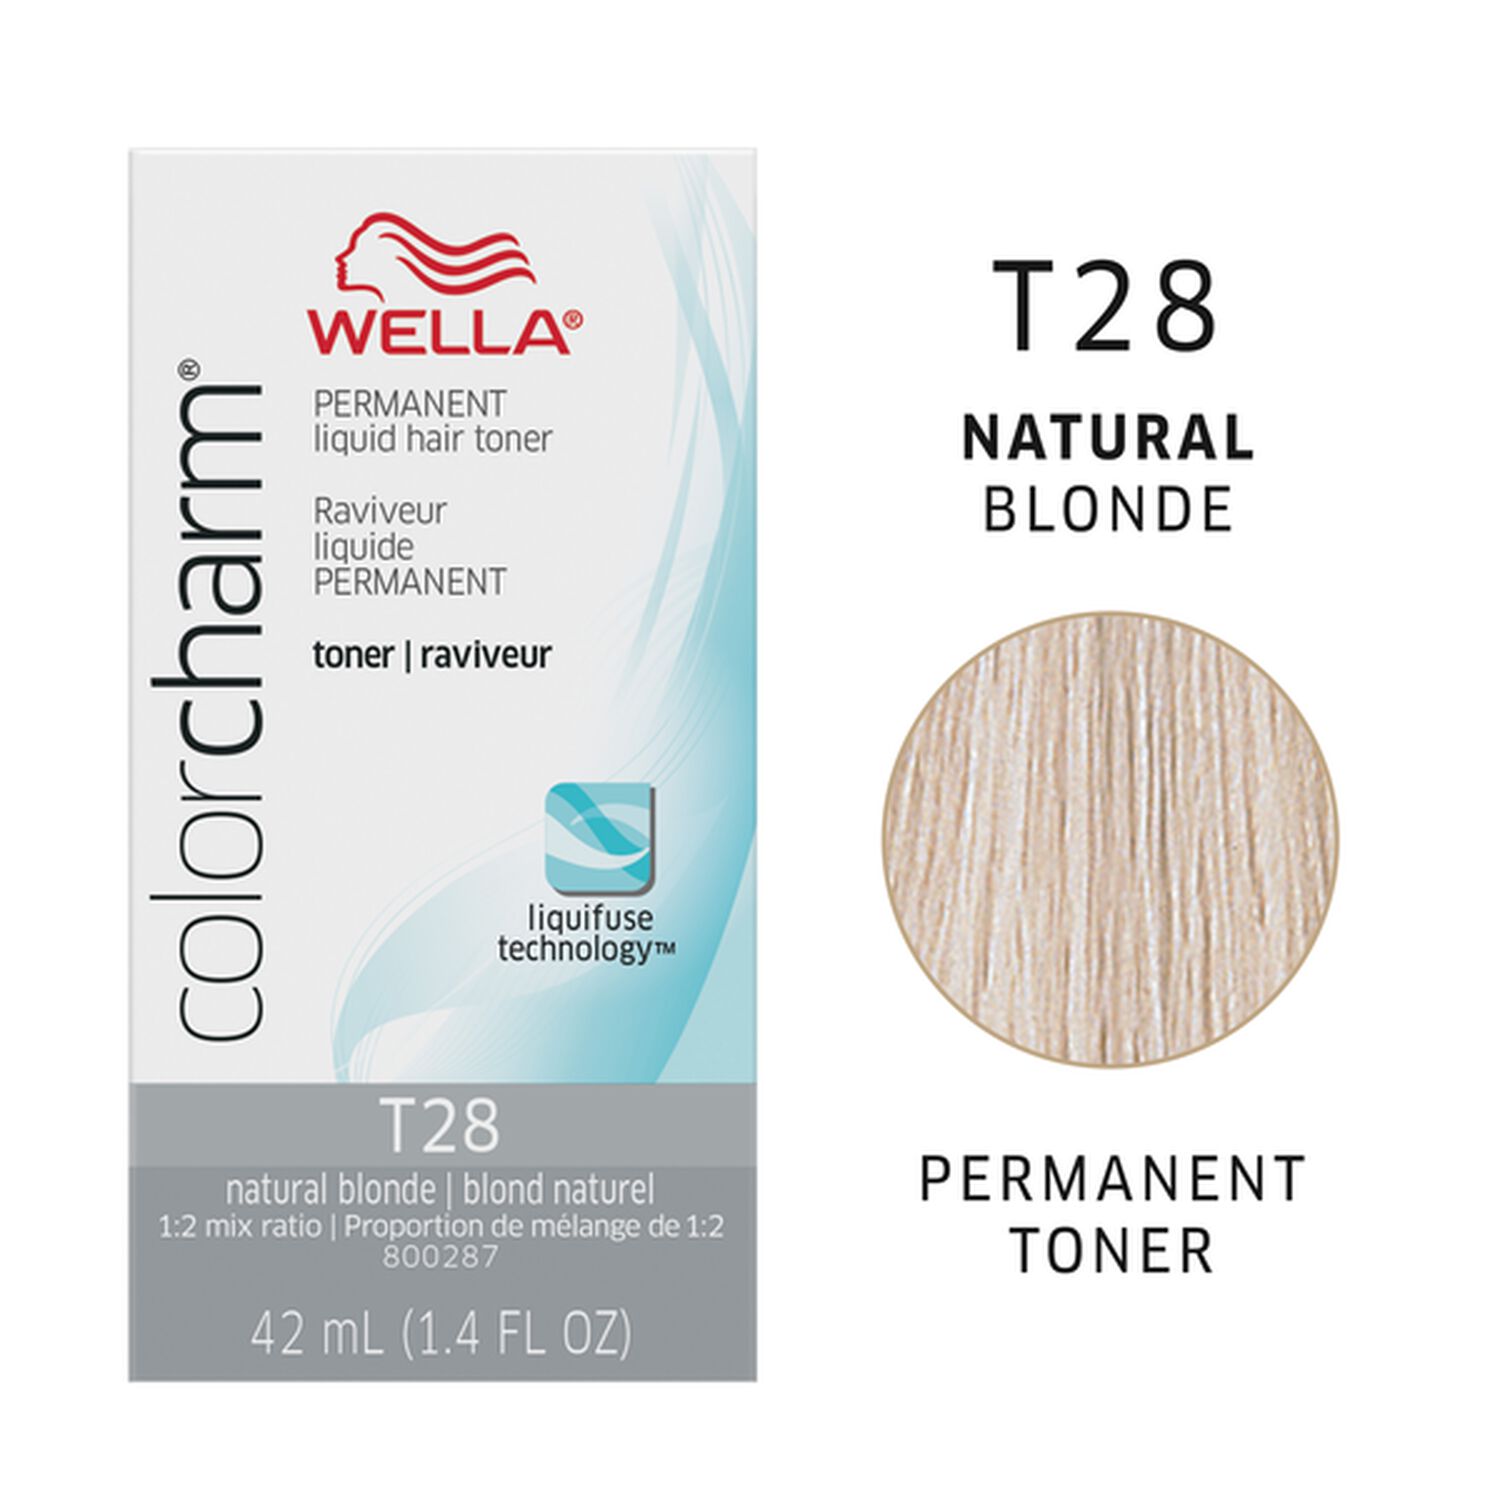 Wella Color Charm T27 Medium Beige Blonde hair toner dye